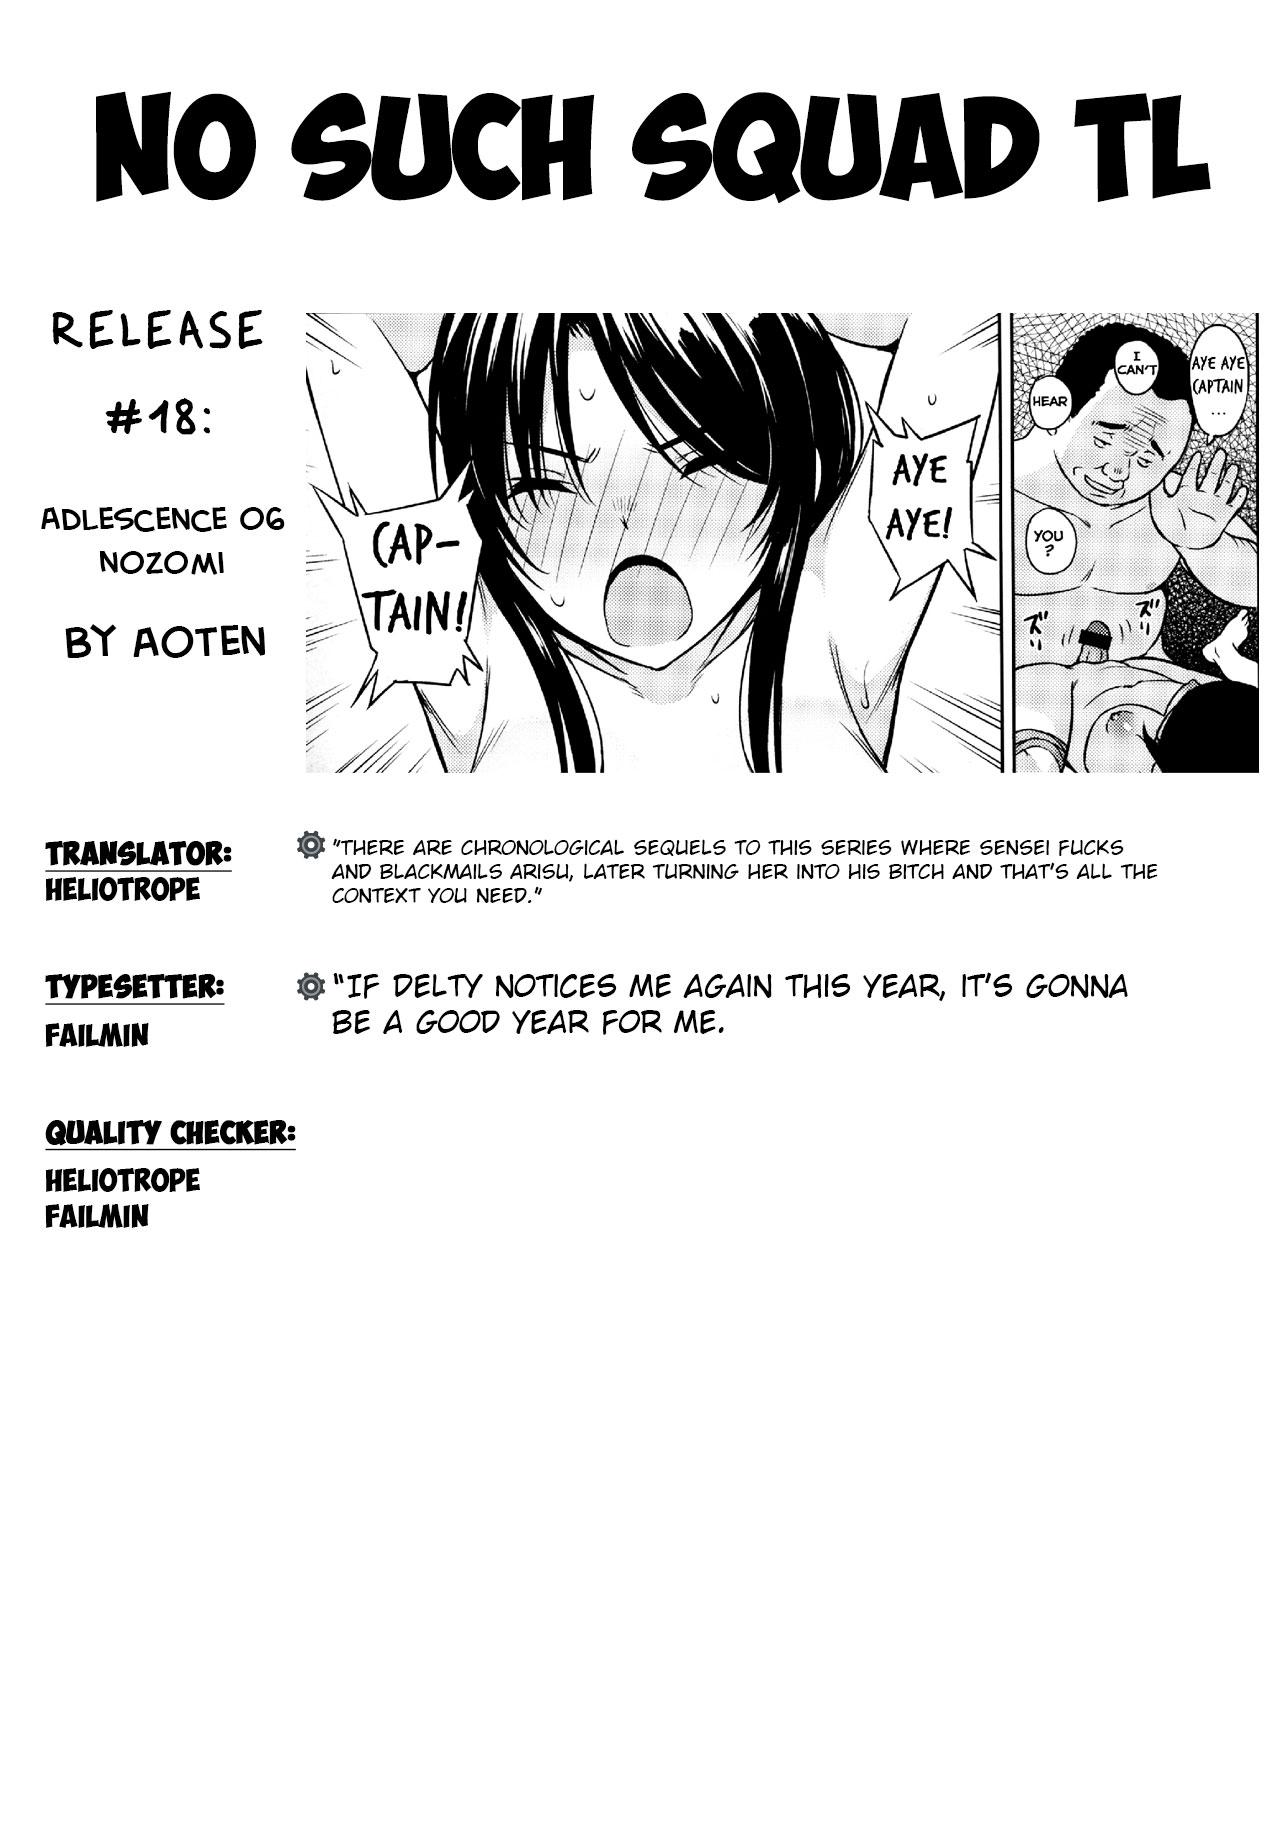 Fisting Adlescence 06 Nozomi - Original Camgirl - Page 31